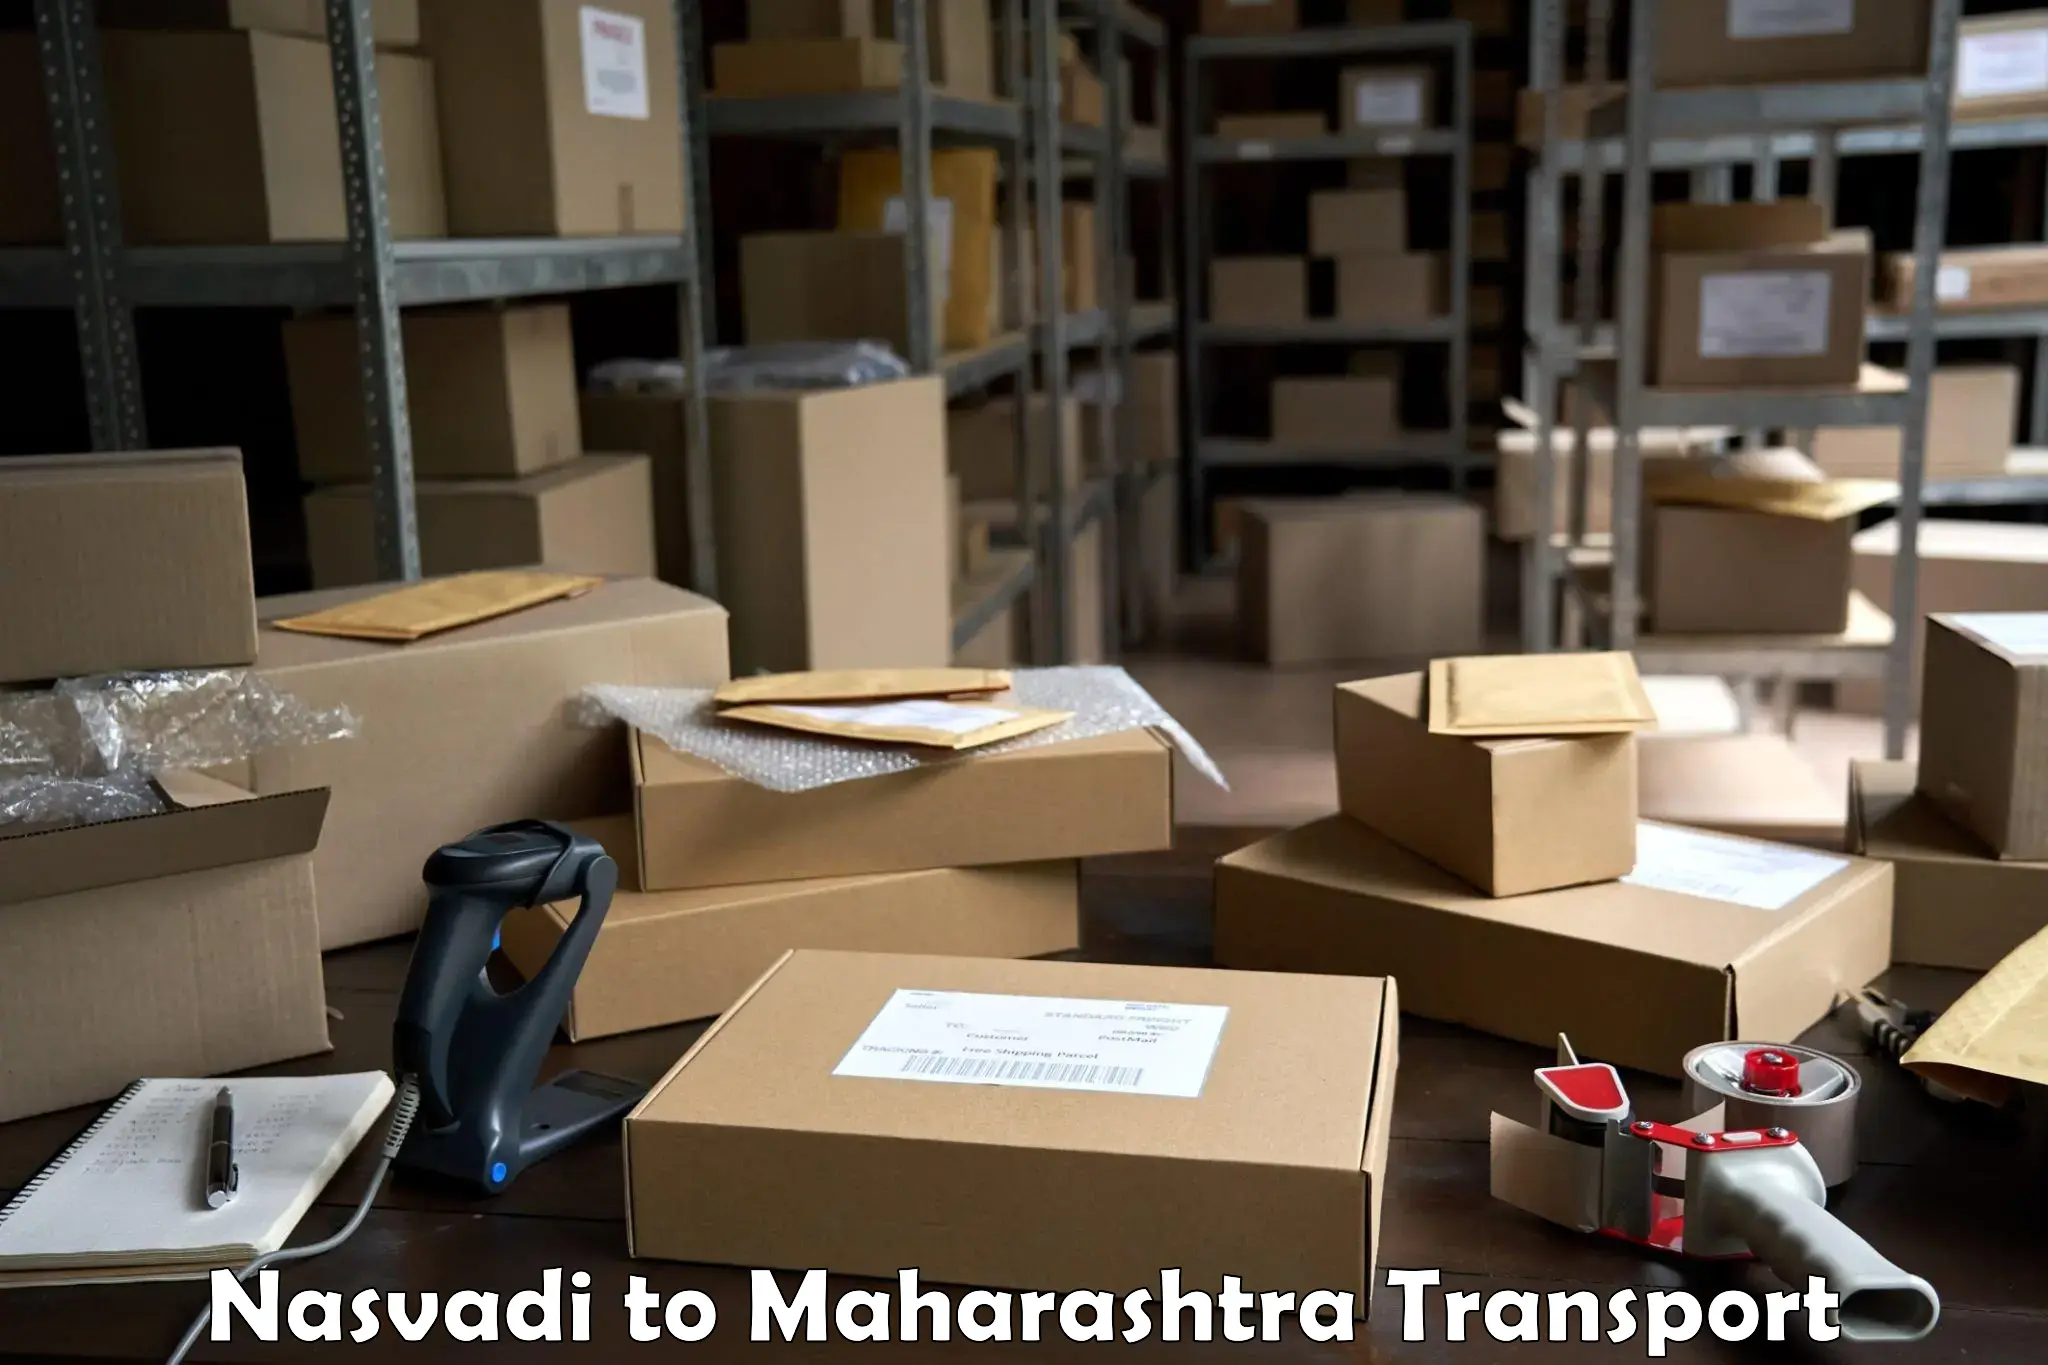 Truck transport companies in India Nasvadi to Khandala Pune